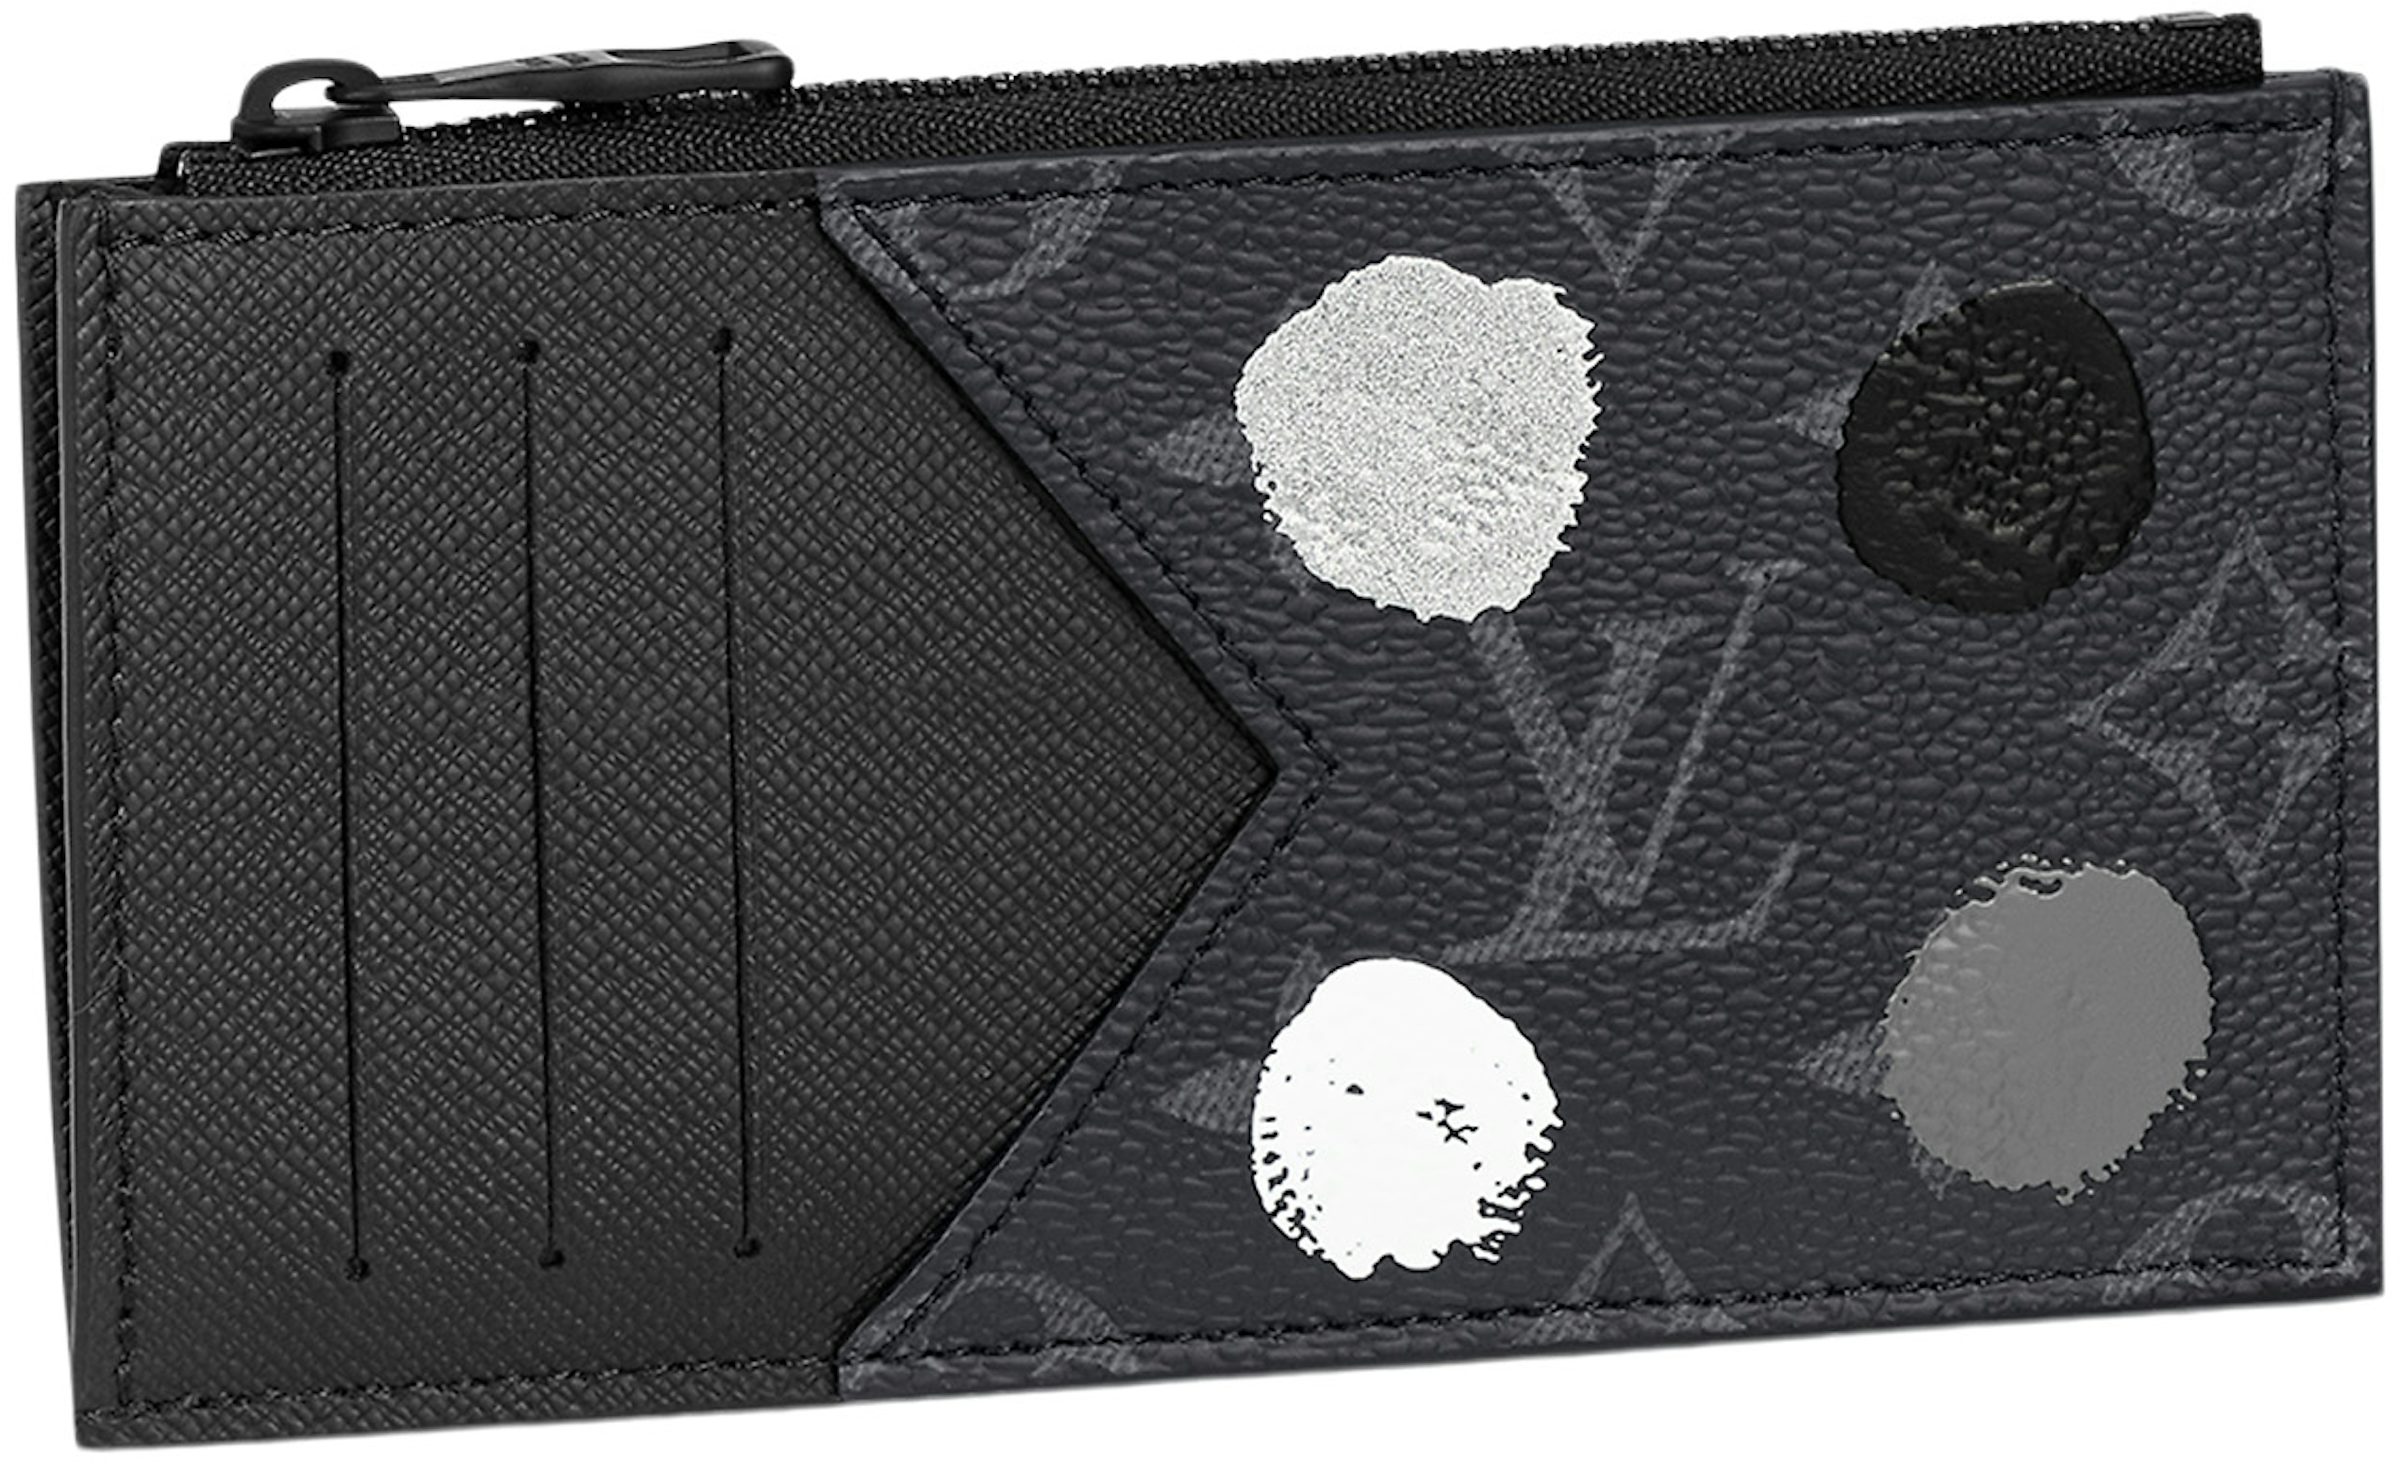 Louis Vuitton x Yayoi Kusama - Polka Dot Paint Monogram Zip Card Holde –  eluXive